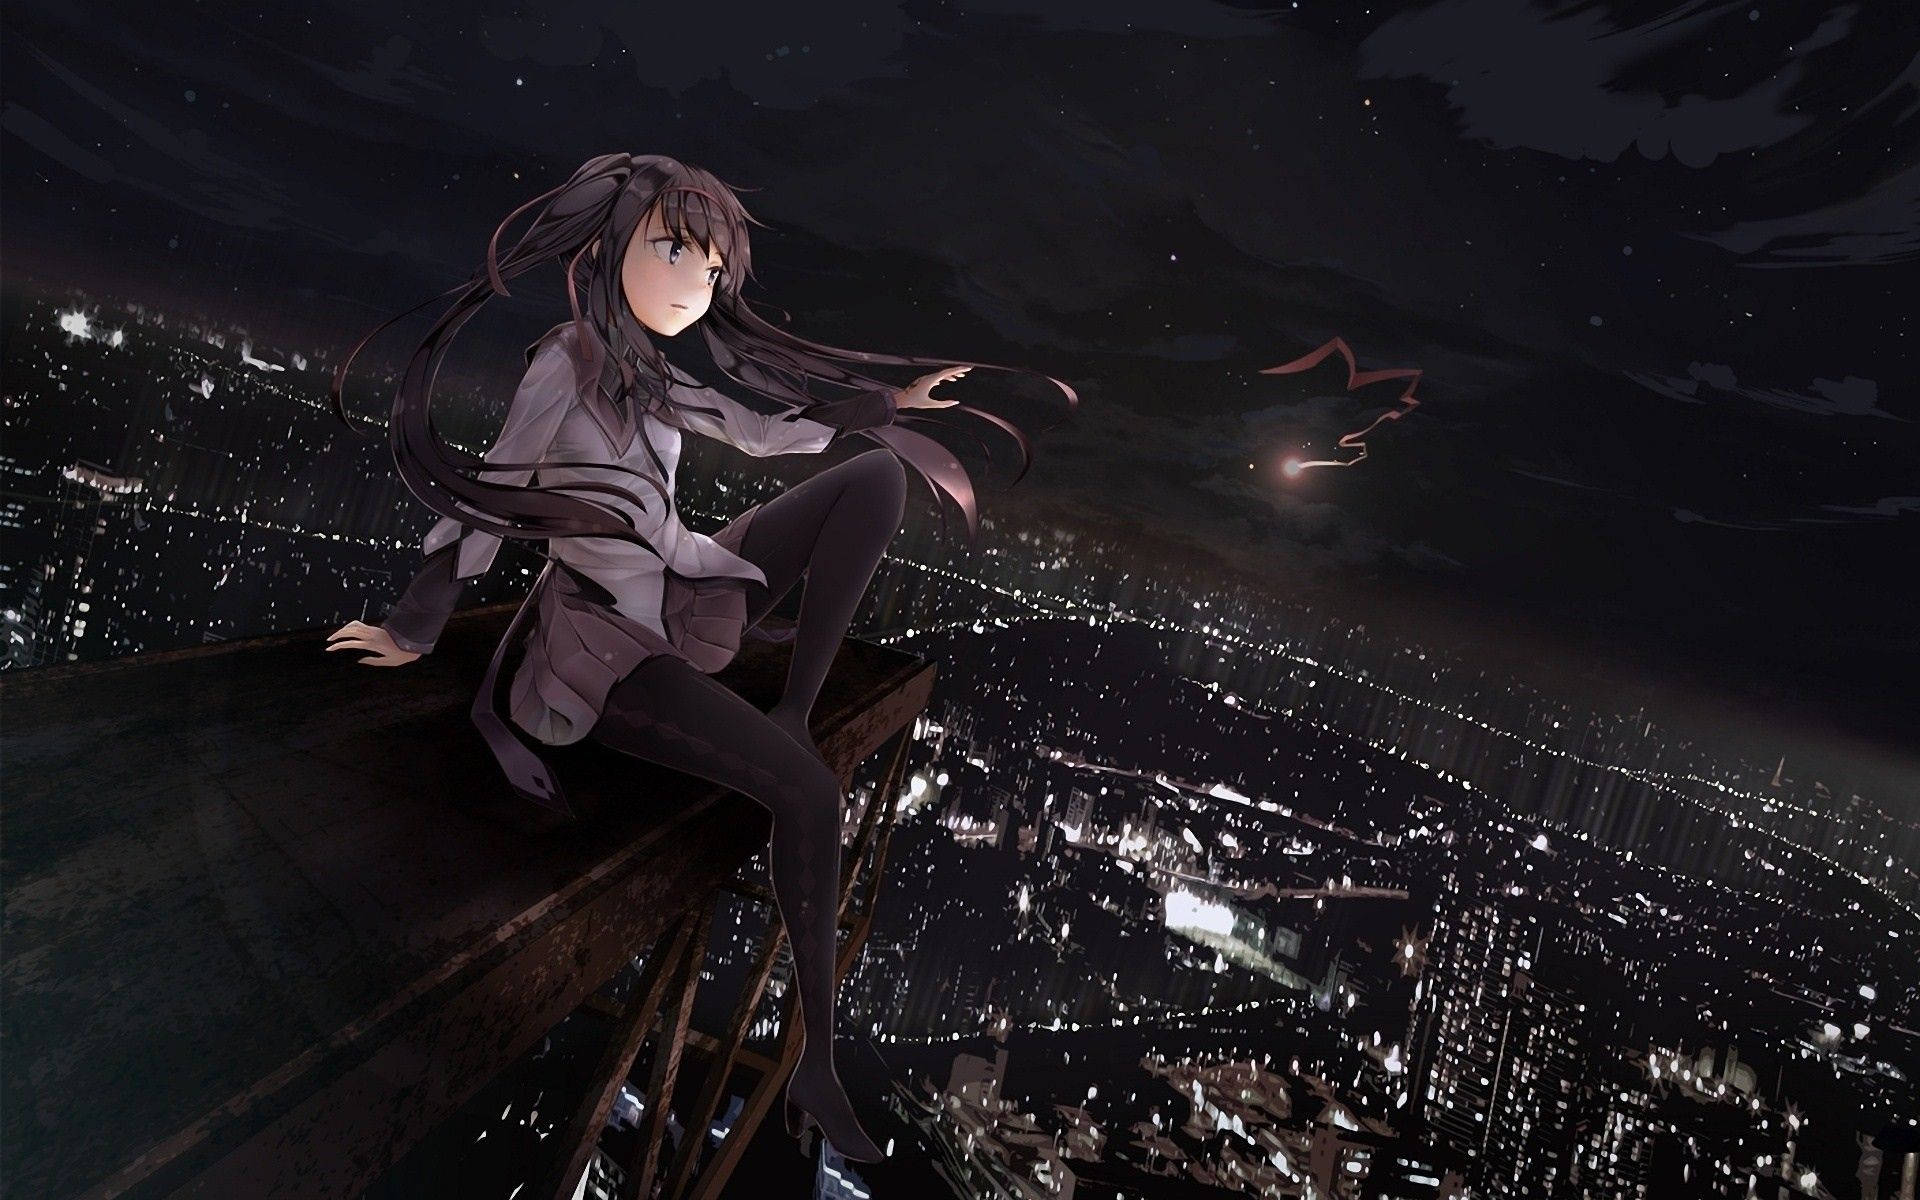 Anime Girl Sad Alone On Ledge City View